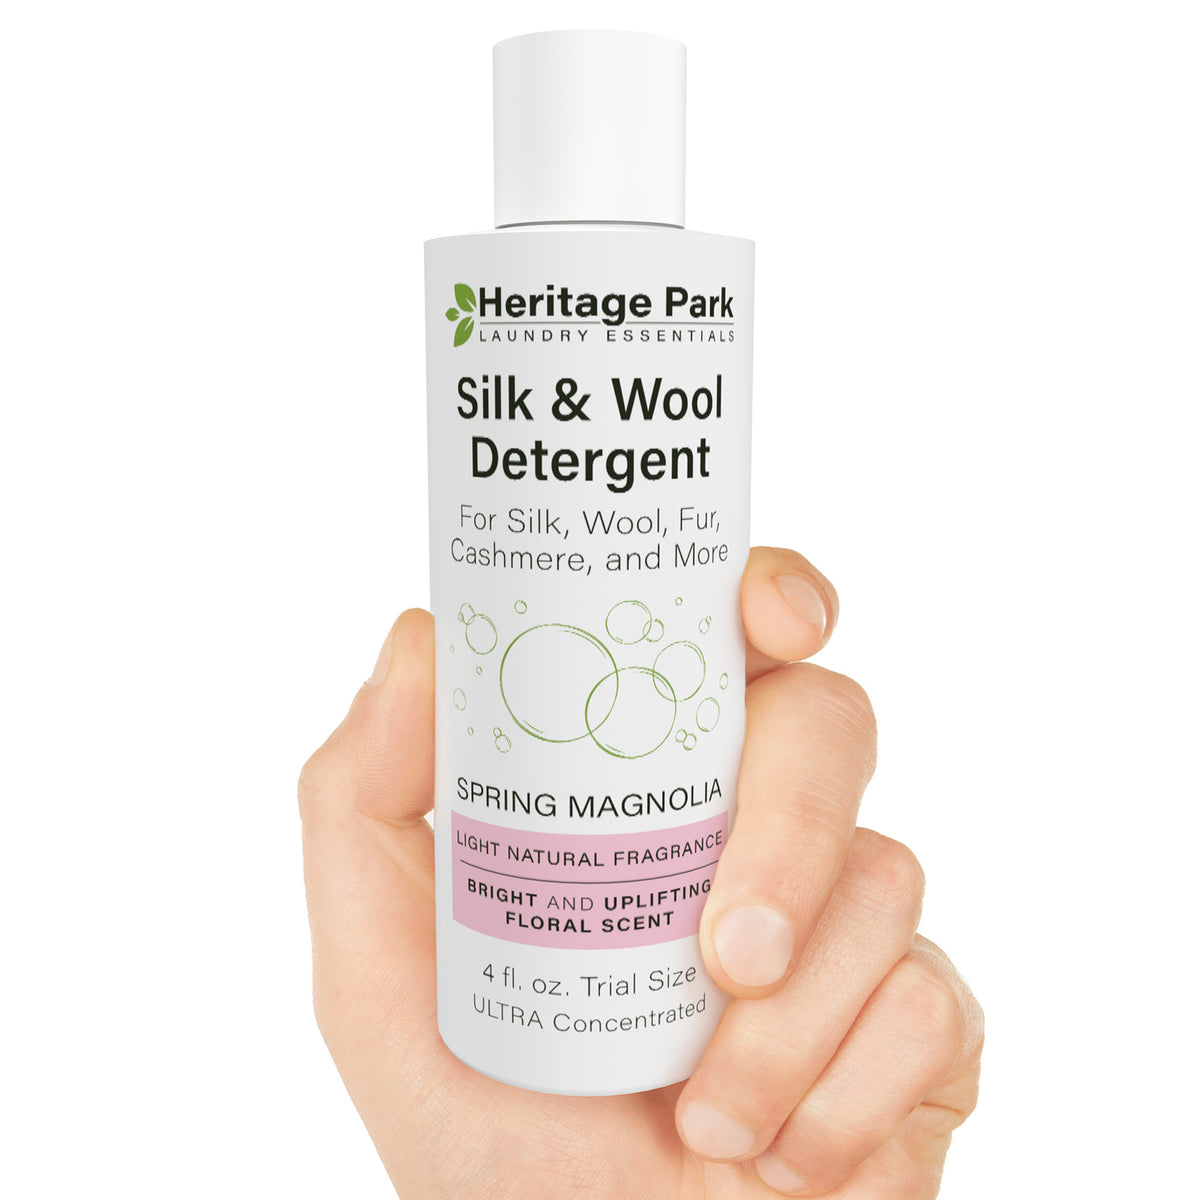 Heritage Park Silk &amp; Wool Laundry Detergent - Spring Magnolia